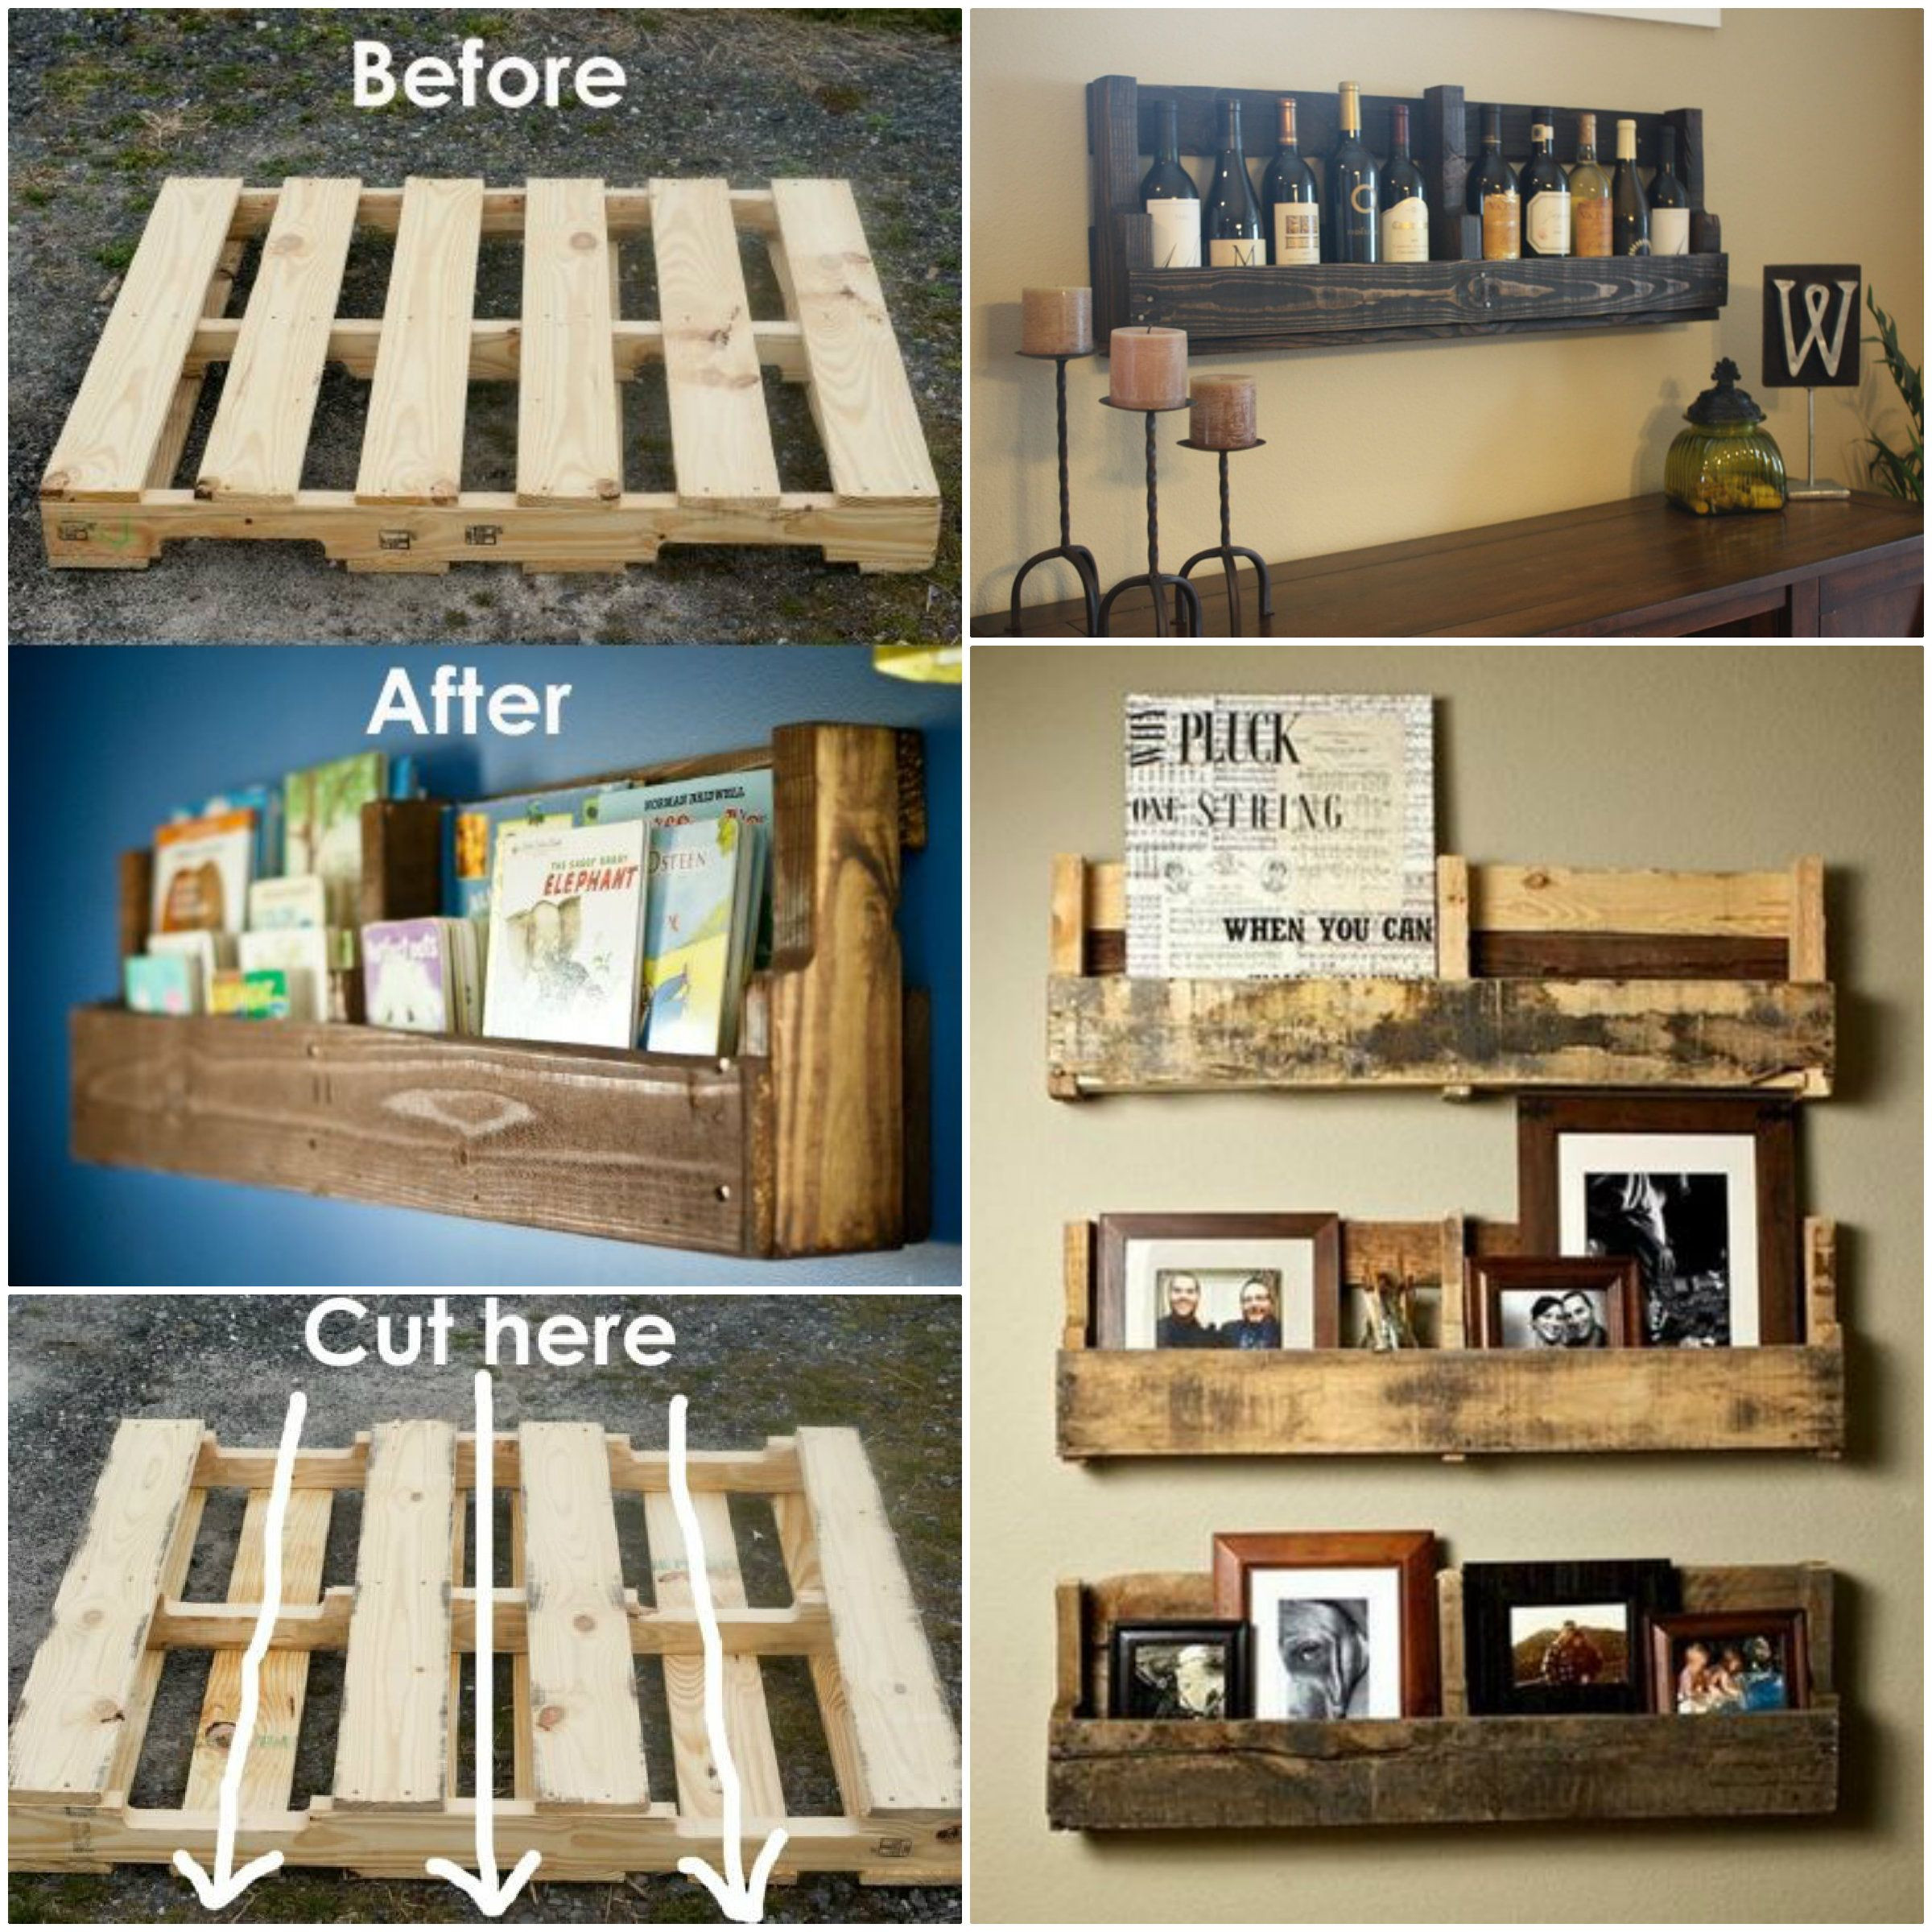 Best ideas about DIY Pallet Shelves
. Save or Pin Pallet Shelf Ideas An Easy DIY Video Tutorial Now.